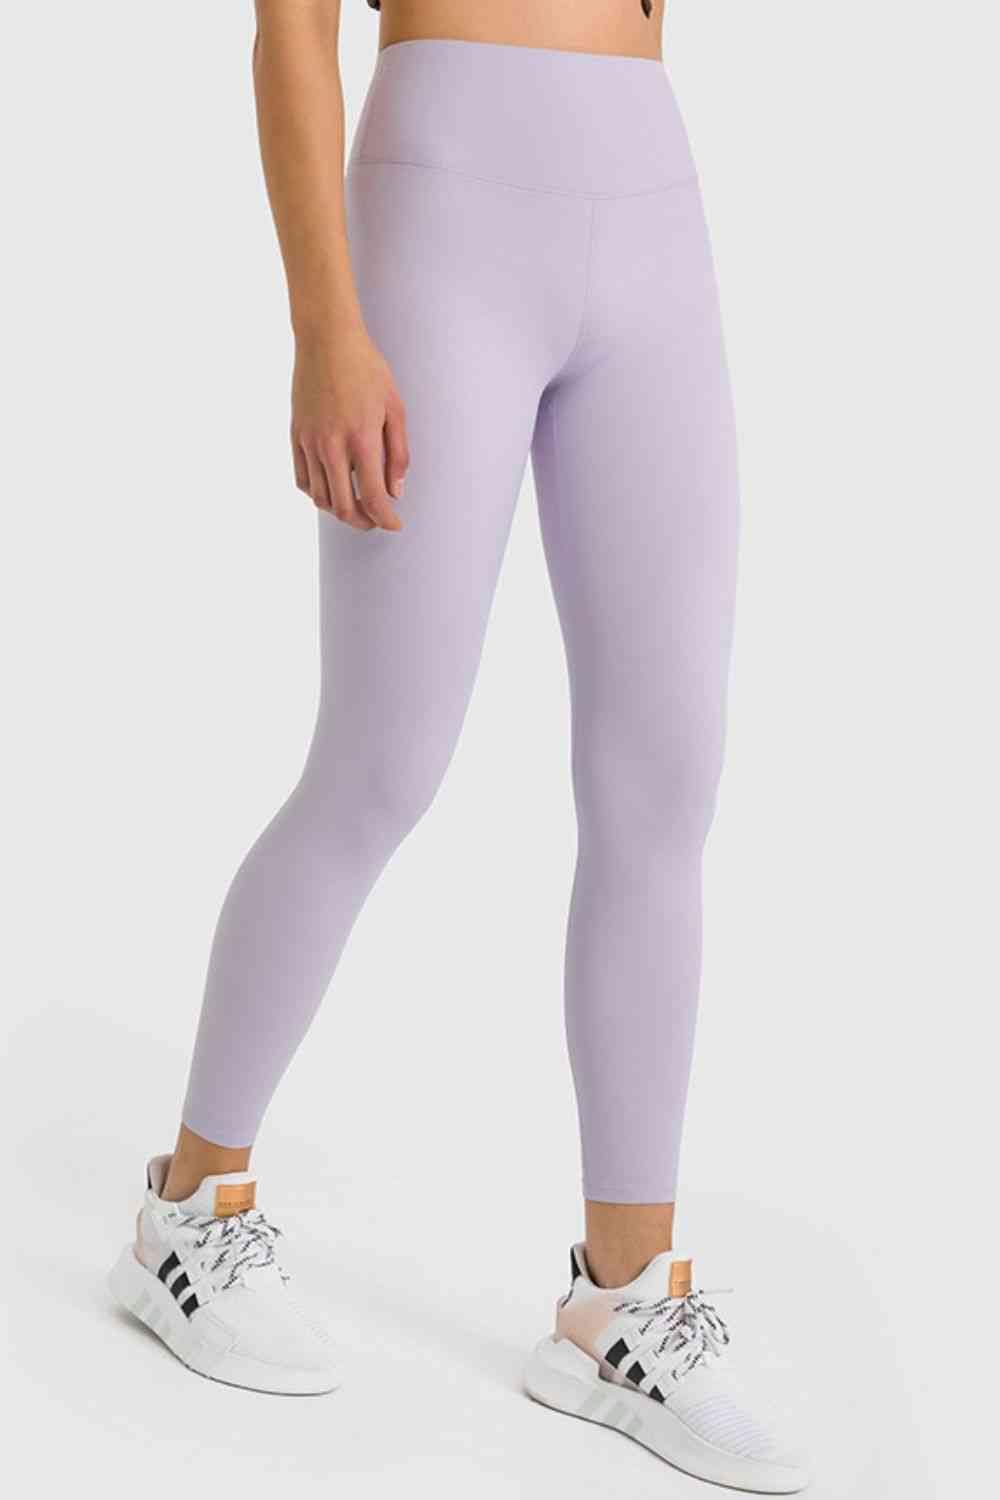 The802Gypsy Activewear Lilac / 4 GYPSY-High Waist Ankle-Length Yoga Leggings